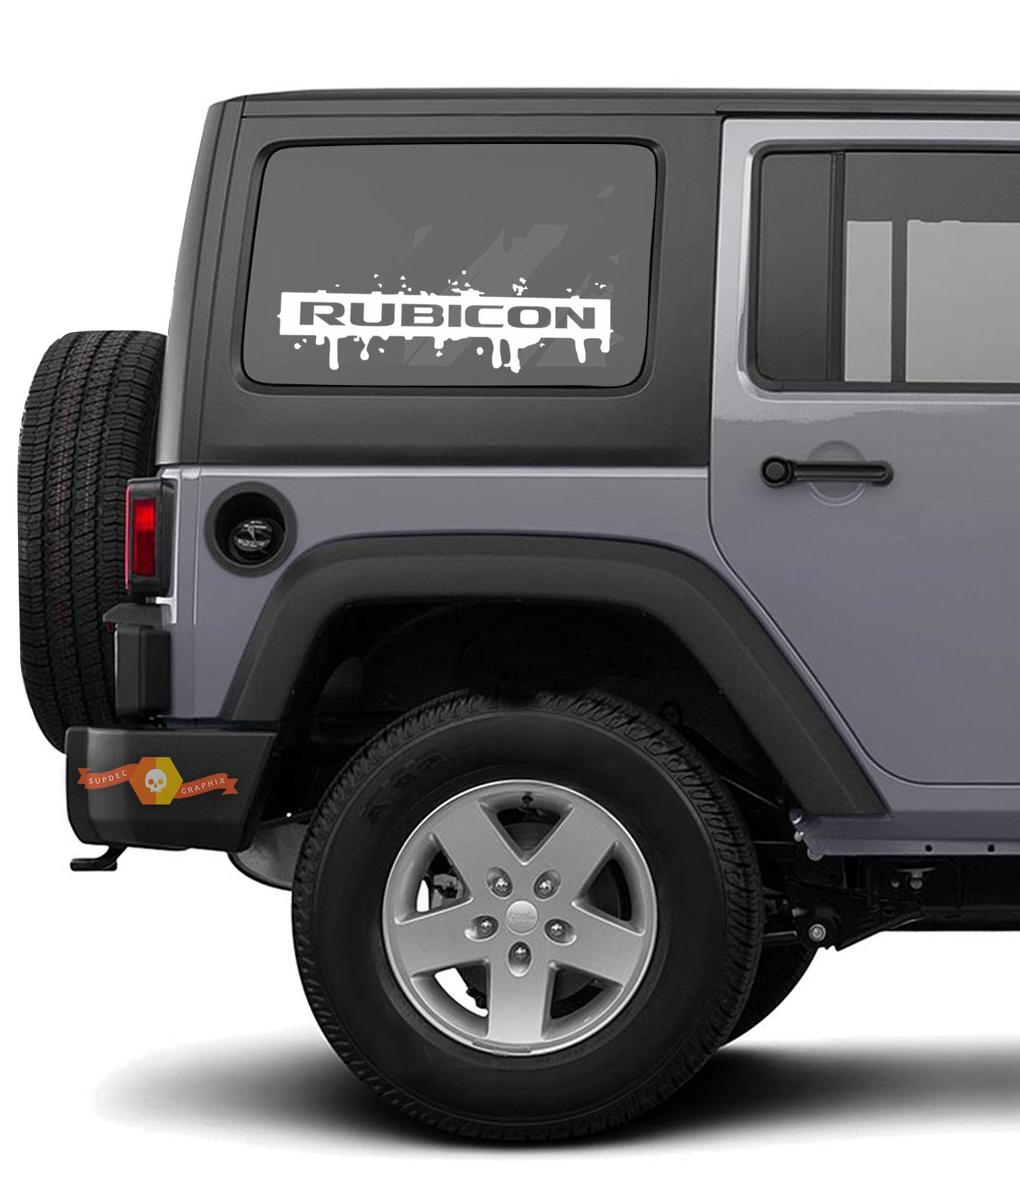 Jeep Renegade Side Splash Splatter Logo Graphic Vinyl Decal